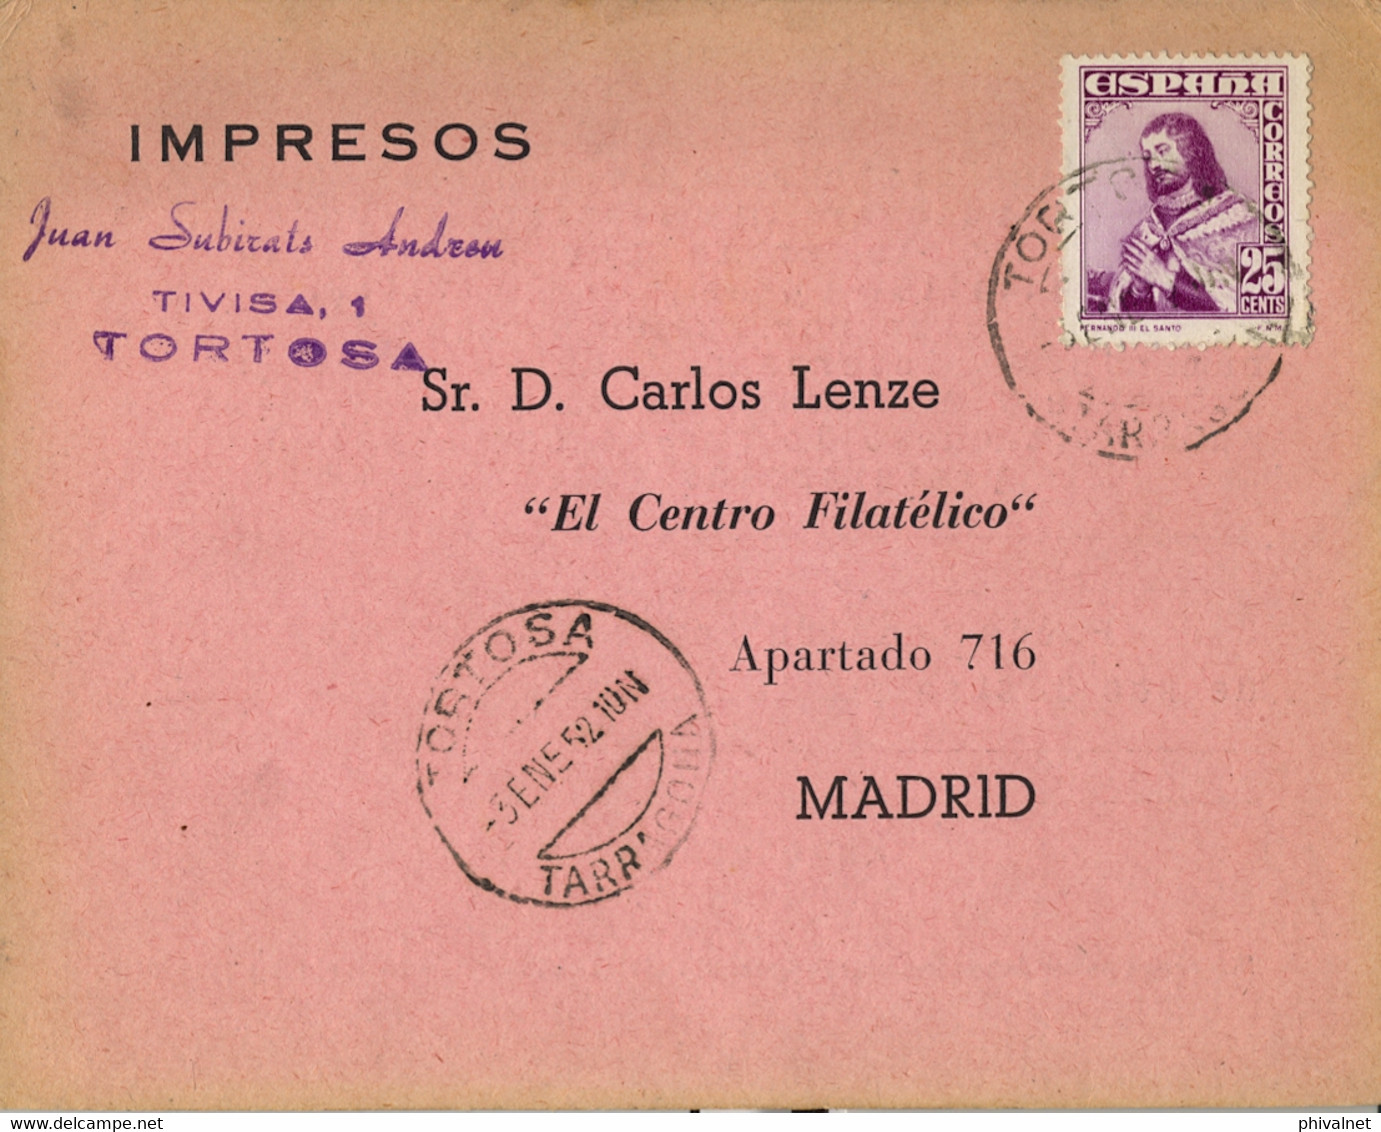 1952 TARRAGONA , TARJETA POSTAL CIRCULADA , IMPRESOS , TORTOSA -MADRID , LLEGADA - Covers & Documents